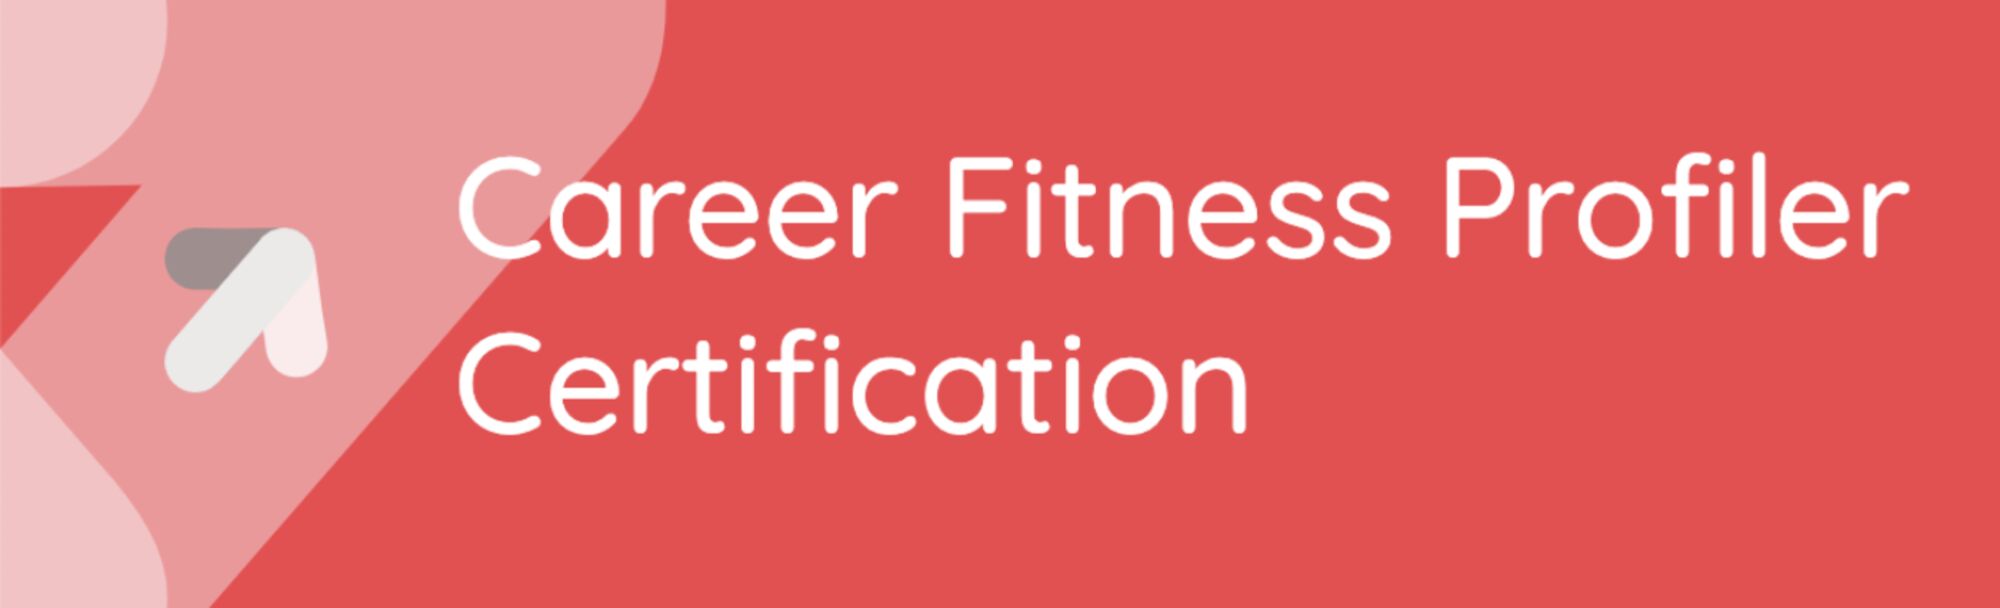 Career Fitness Profiler Certification.png